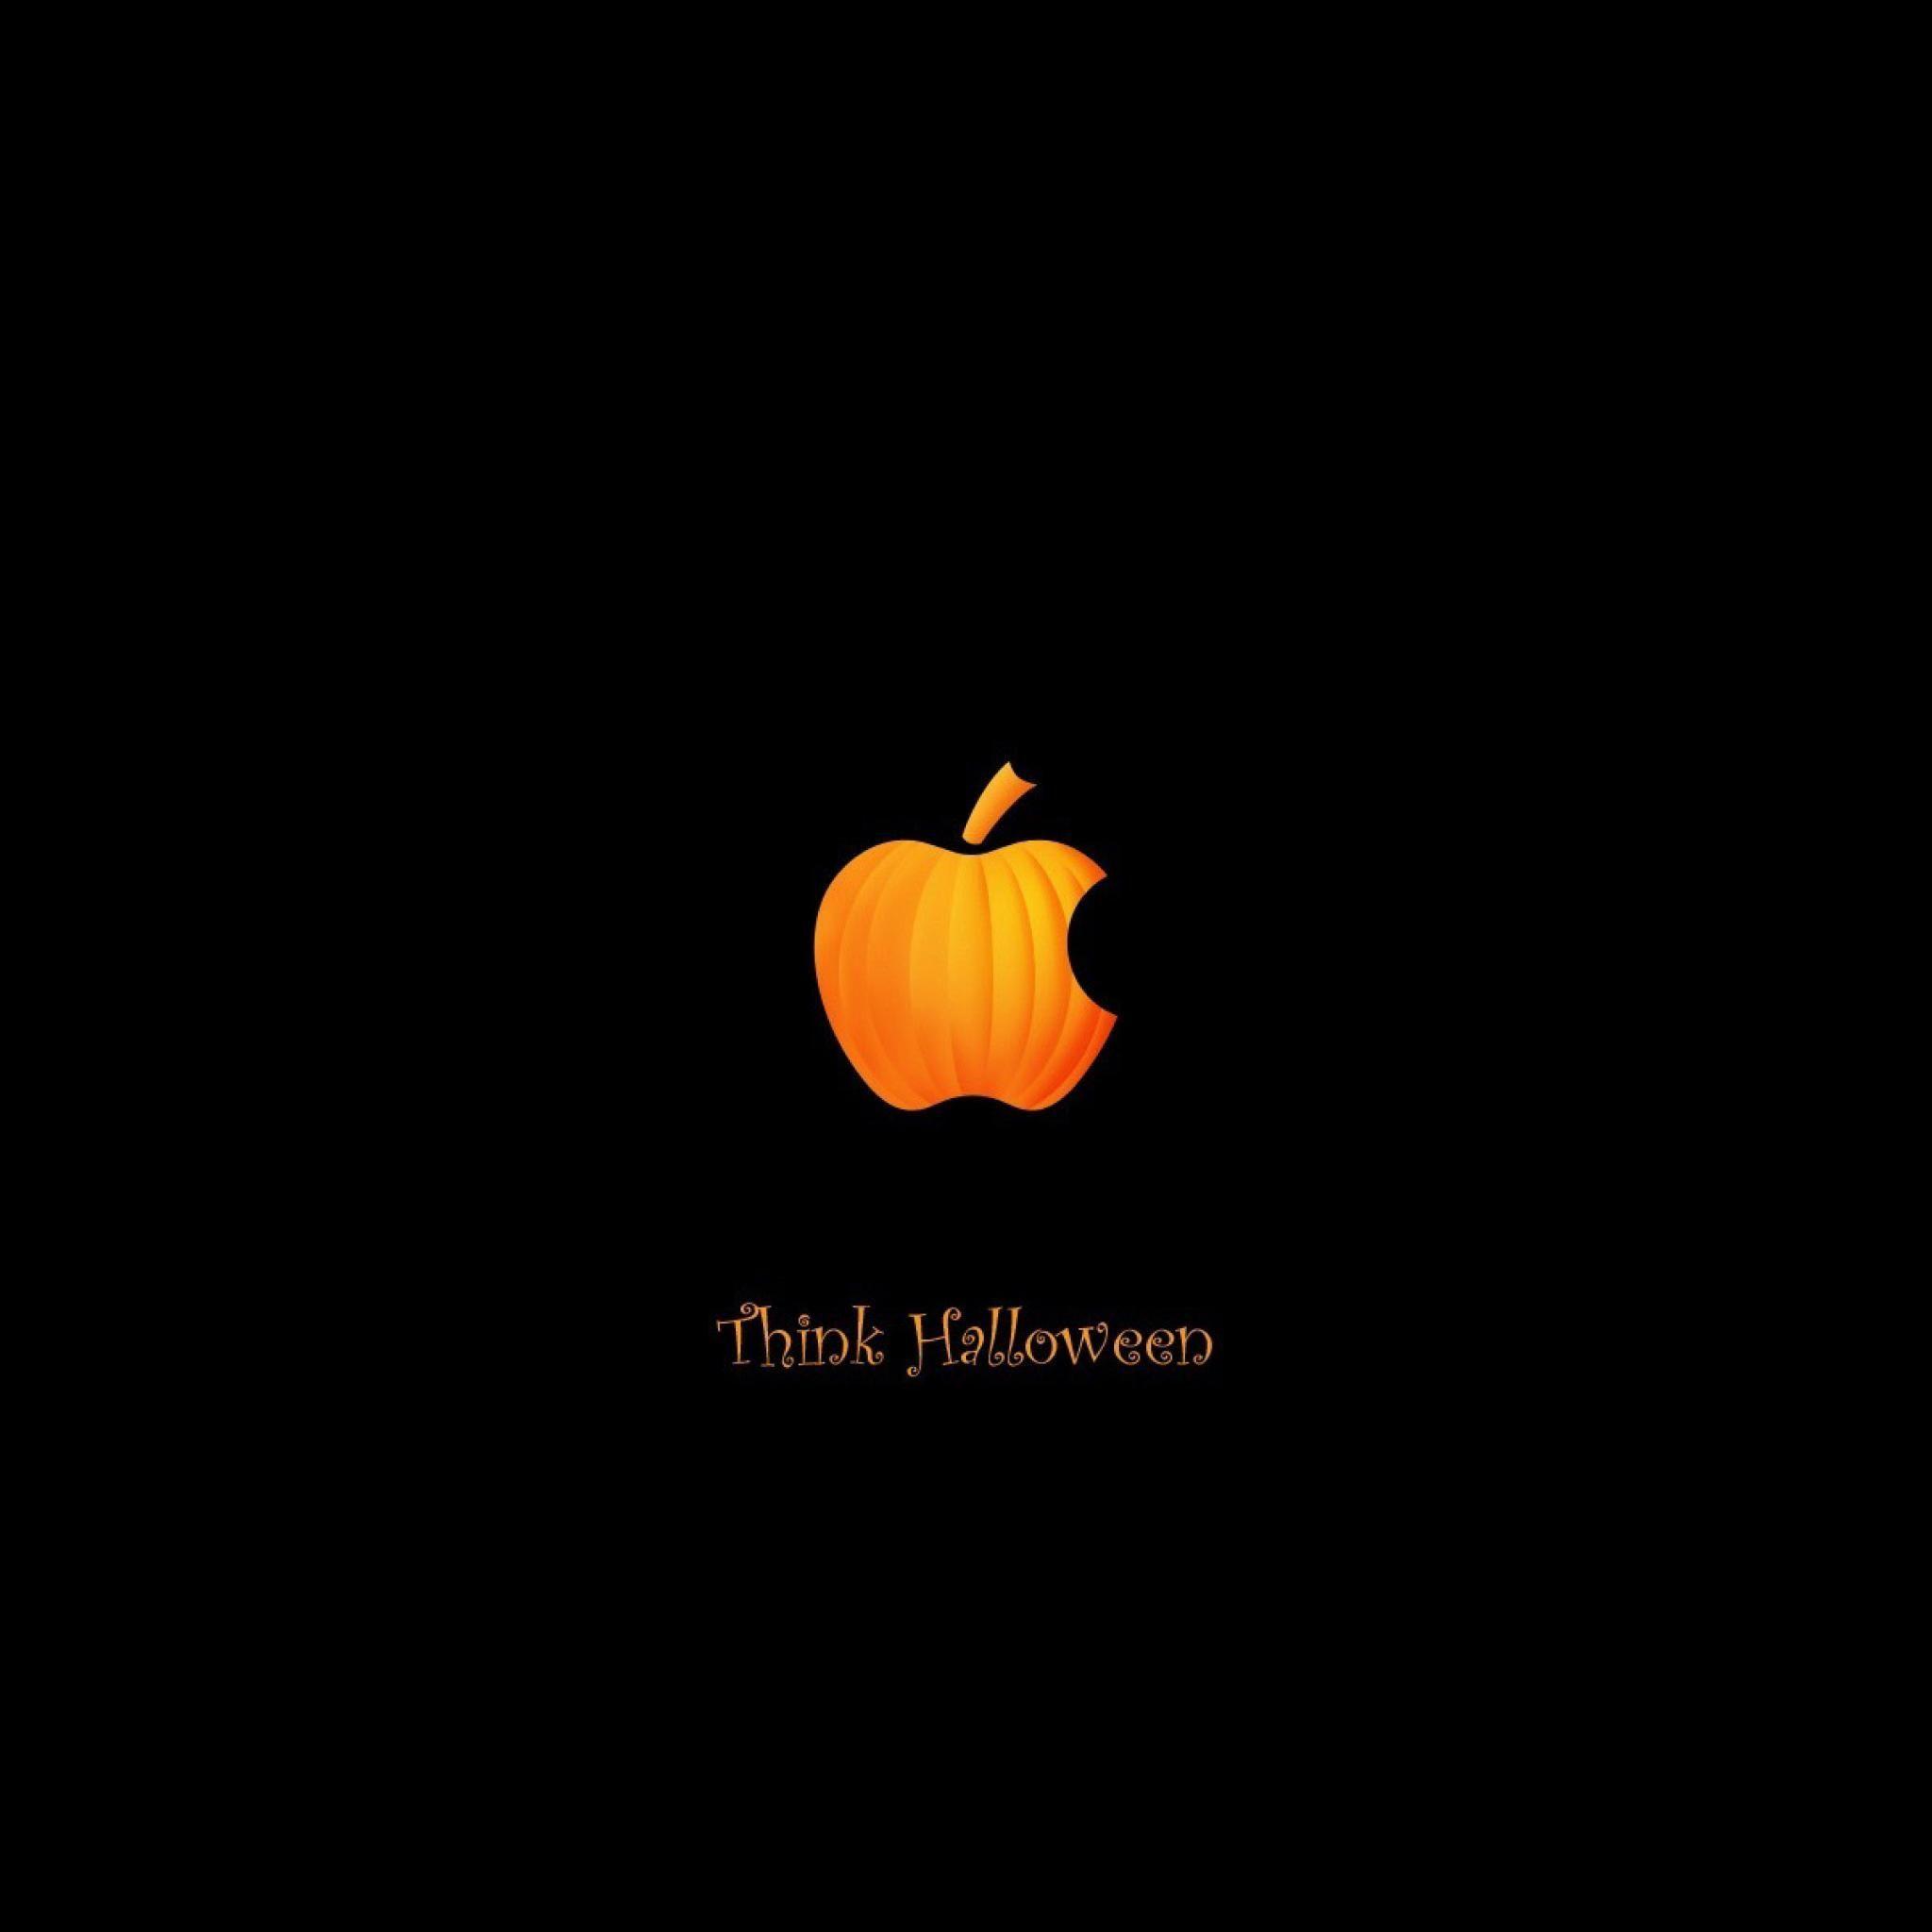 Halloween Pumpkin iPad Air Wallpapers Free Download